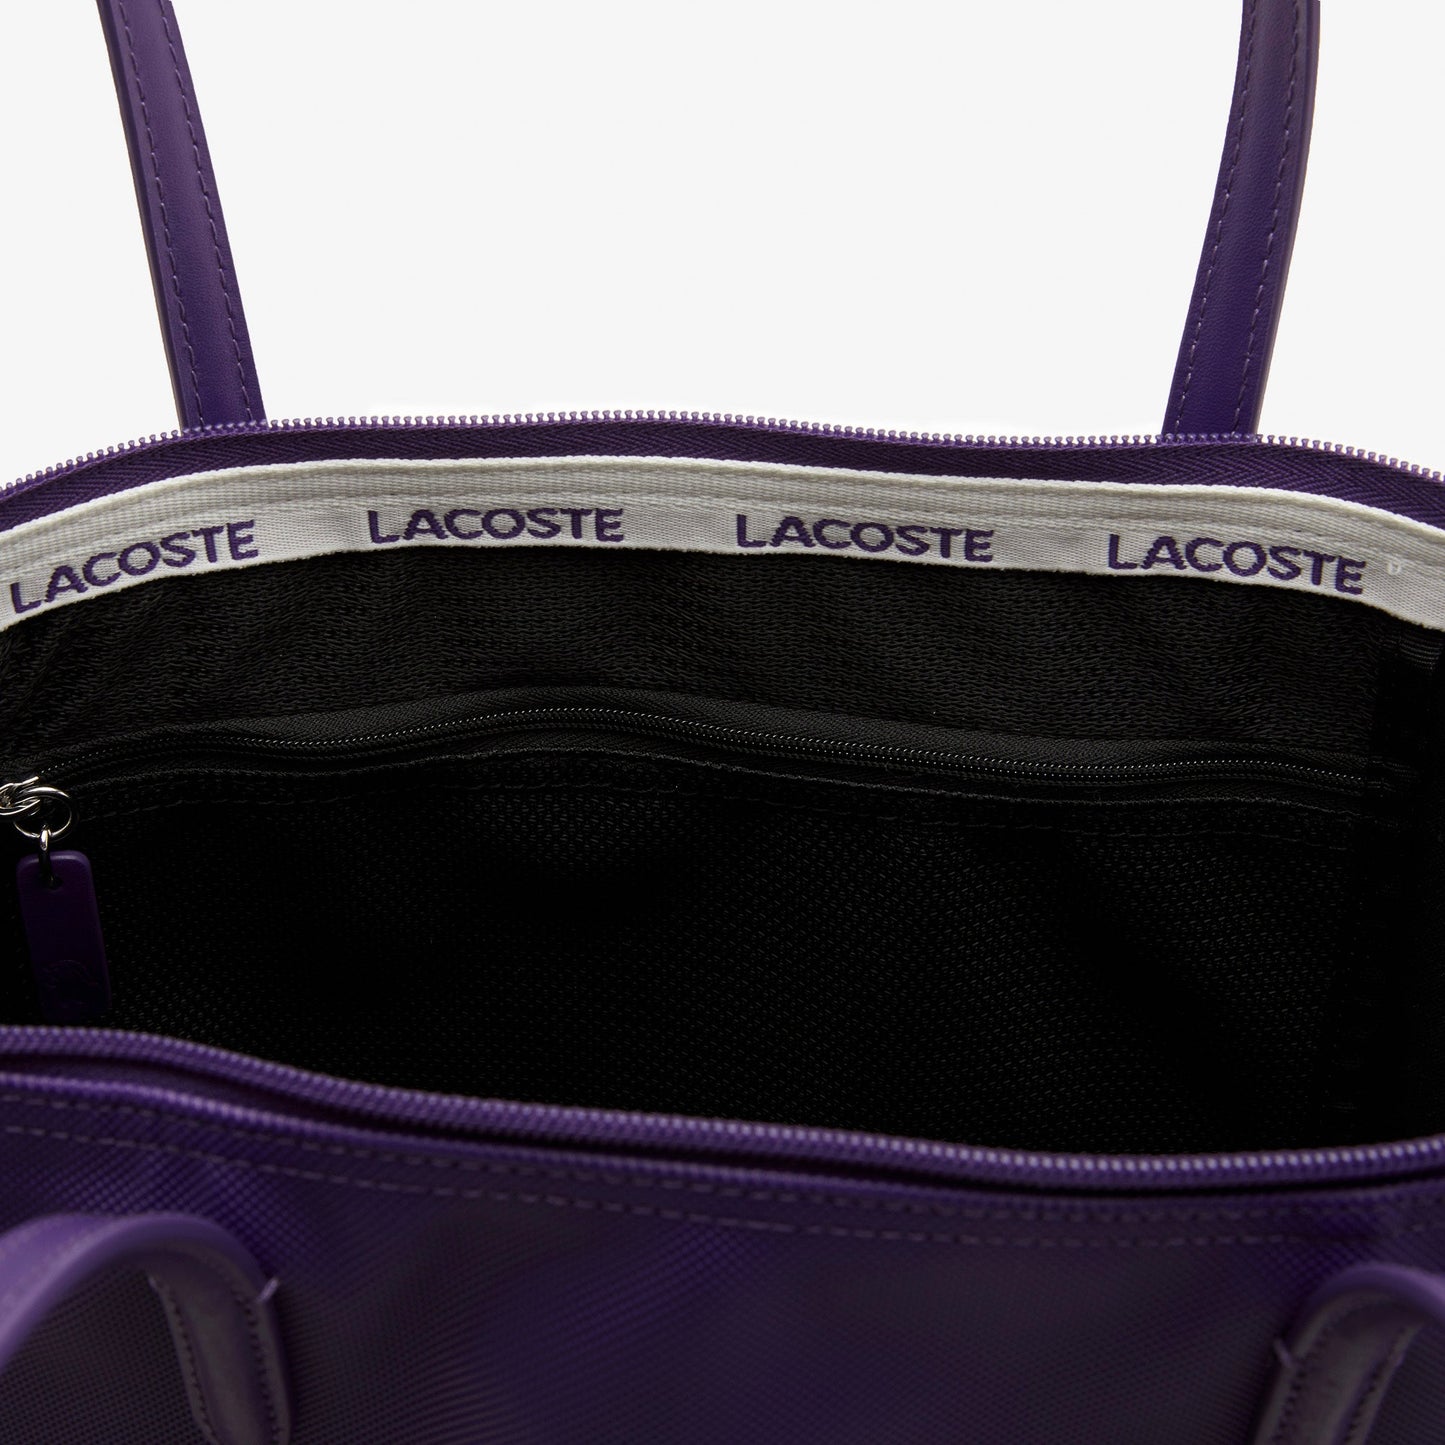 Women's L.12.12 Concept Zip Tote Bag - NF1888PO